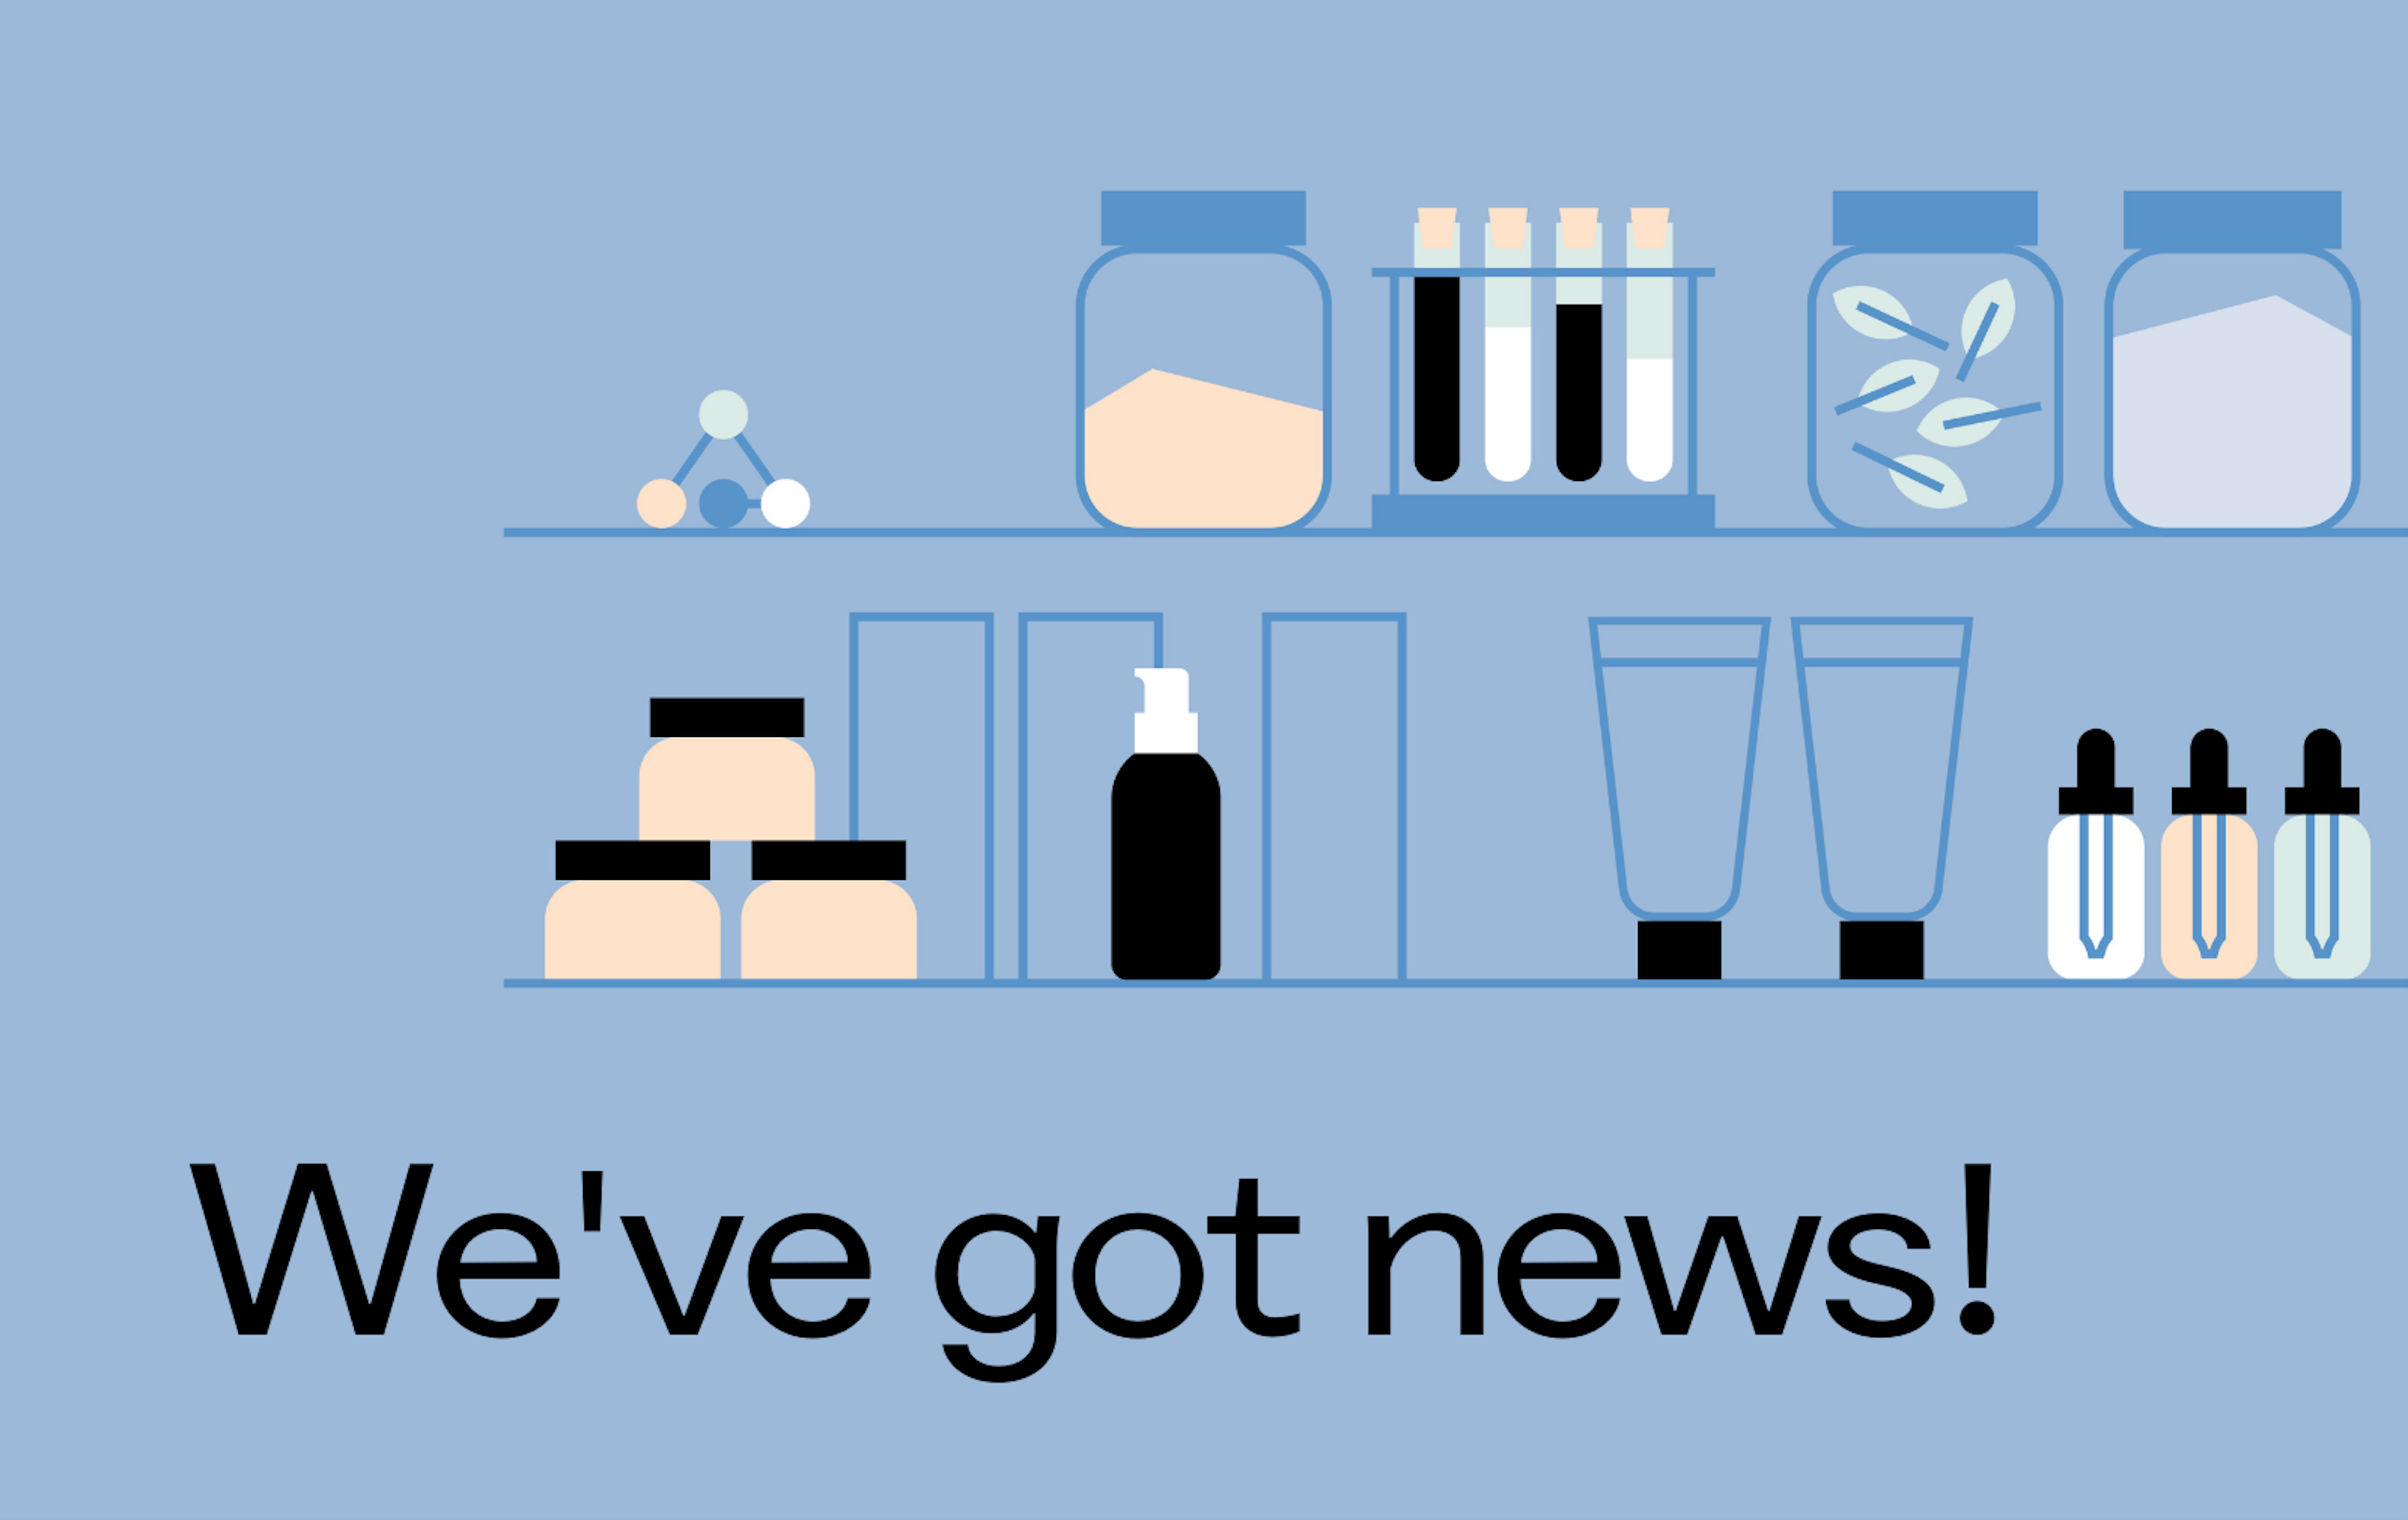 We've got news! illustration of laboratory objects